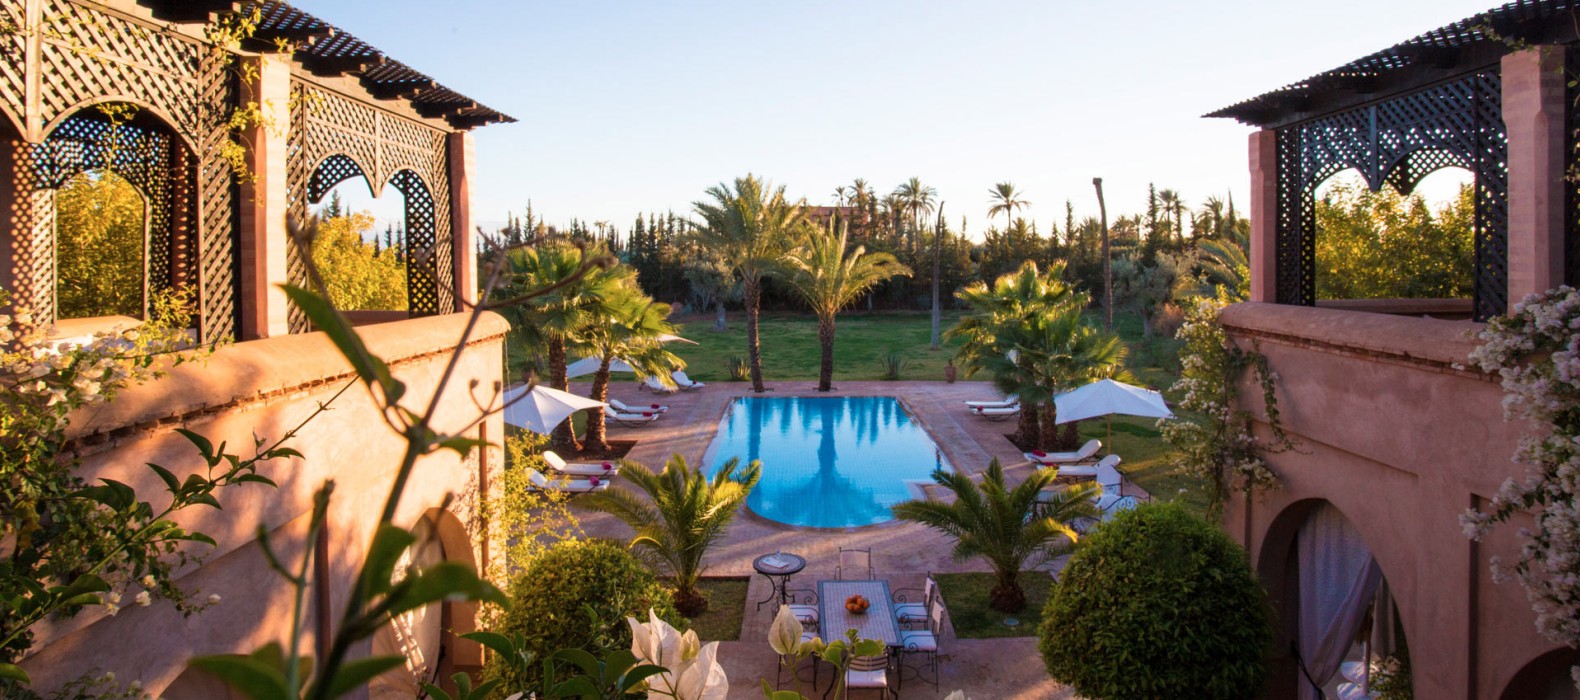 Landscape view of Villa Mansour in Marrakech